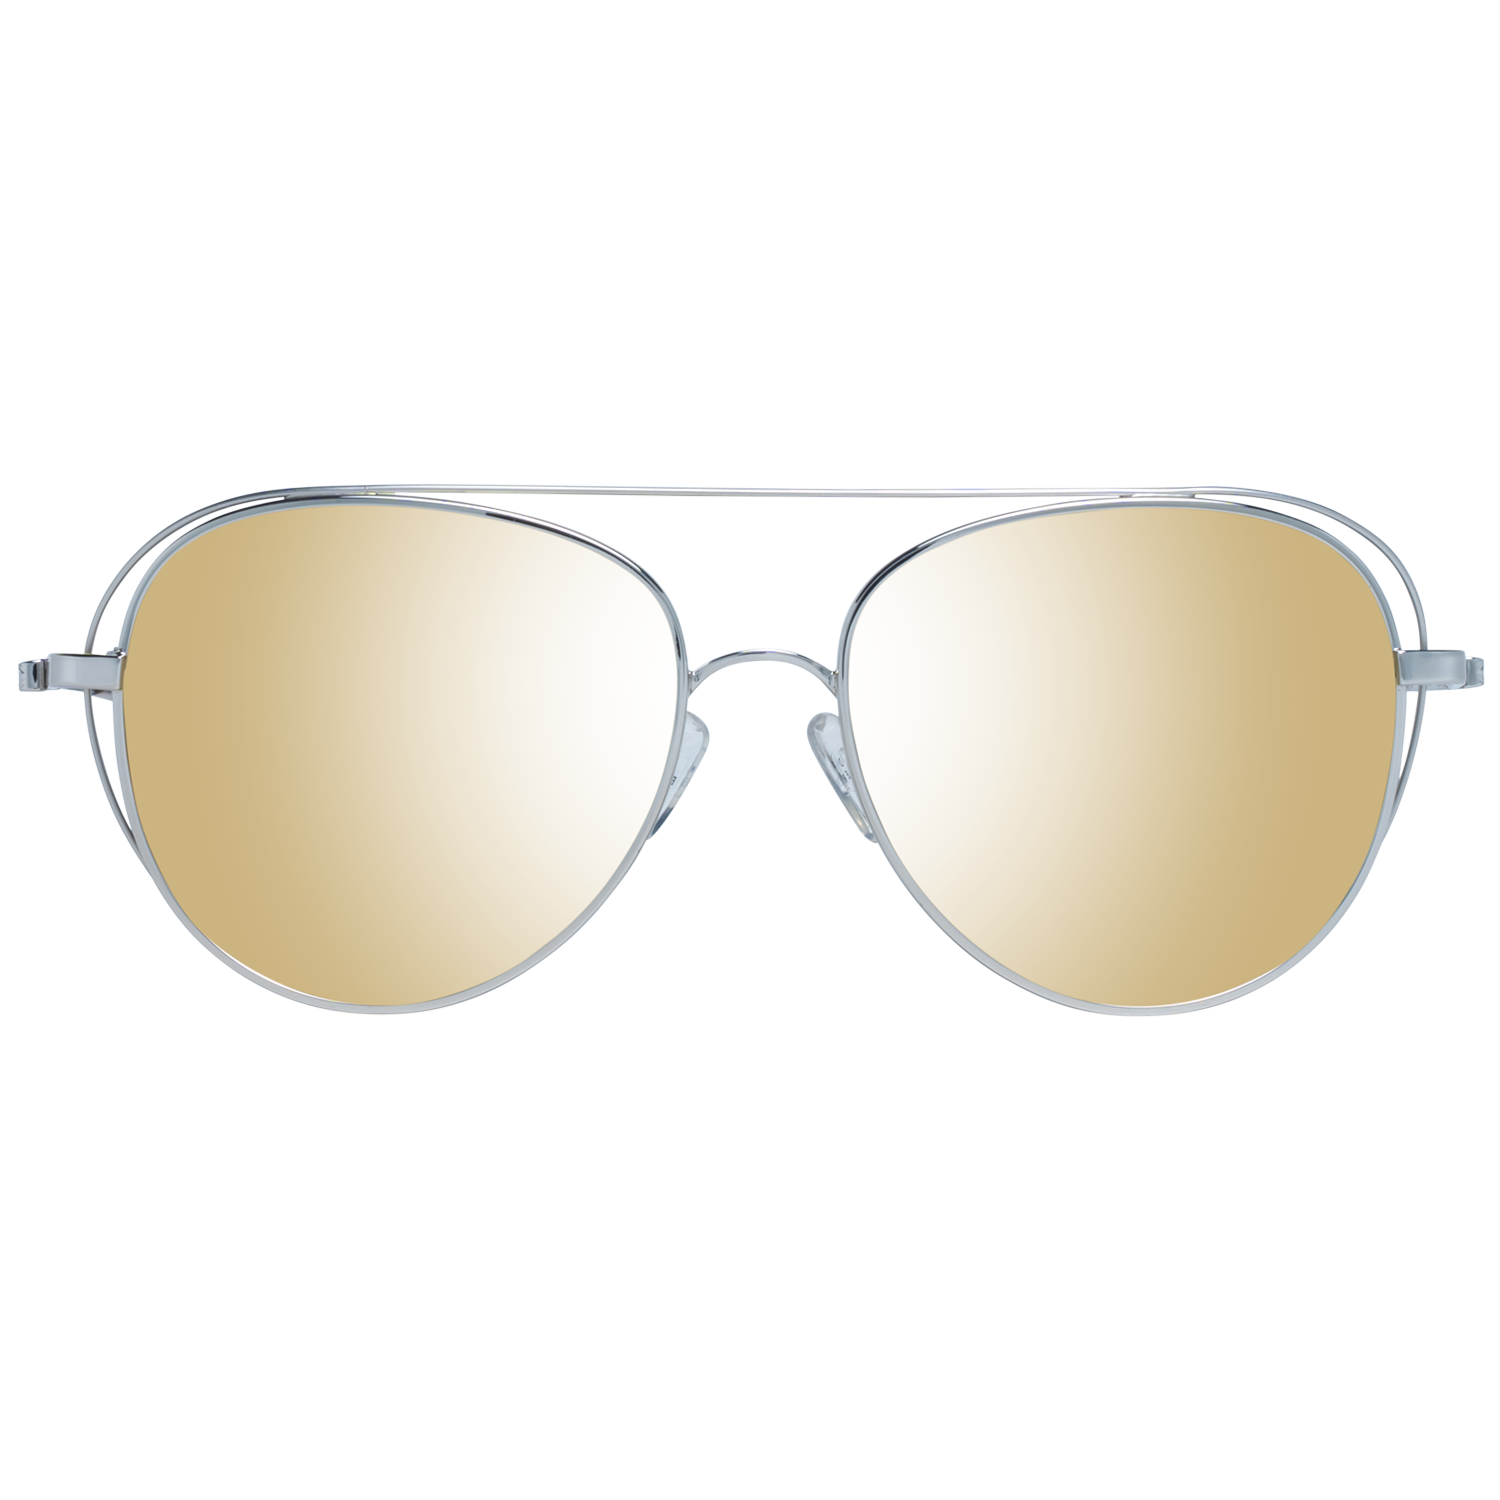 Ted Baker Sunglasses Ted Baker Sunglasses TB1575 800 56 Eyeglasses Eyewear UK USA Australia 